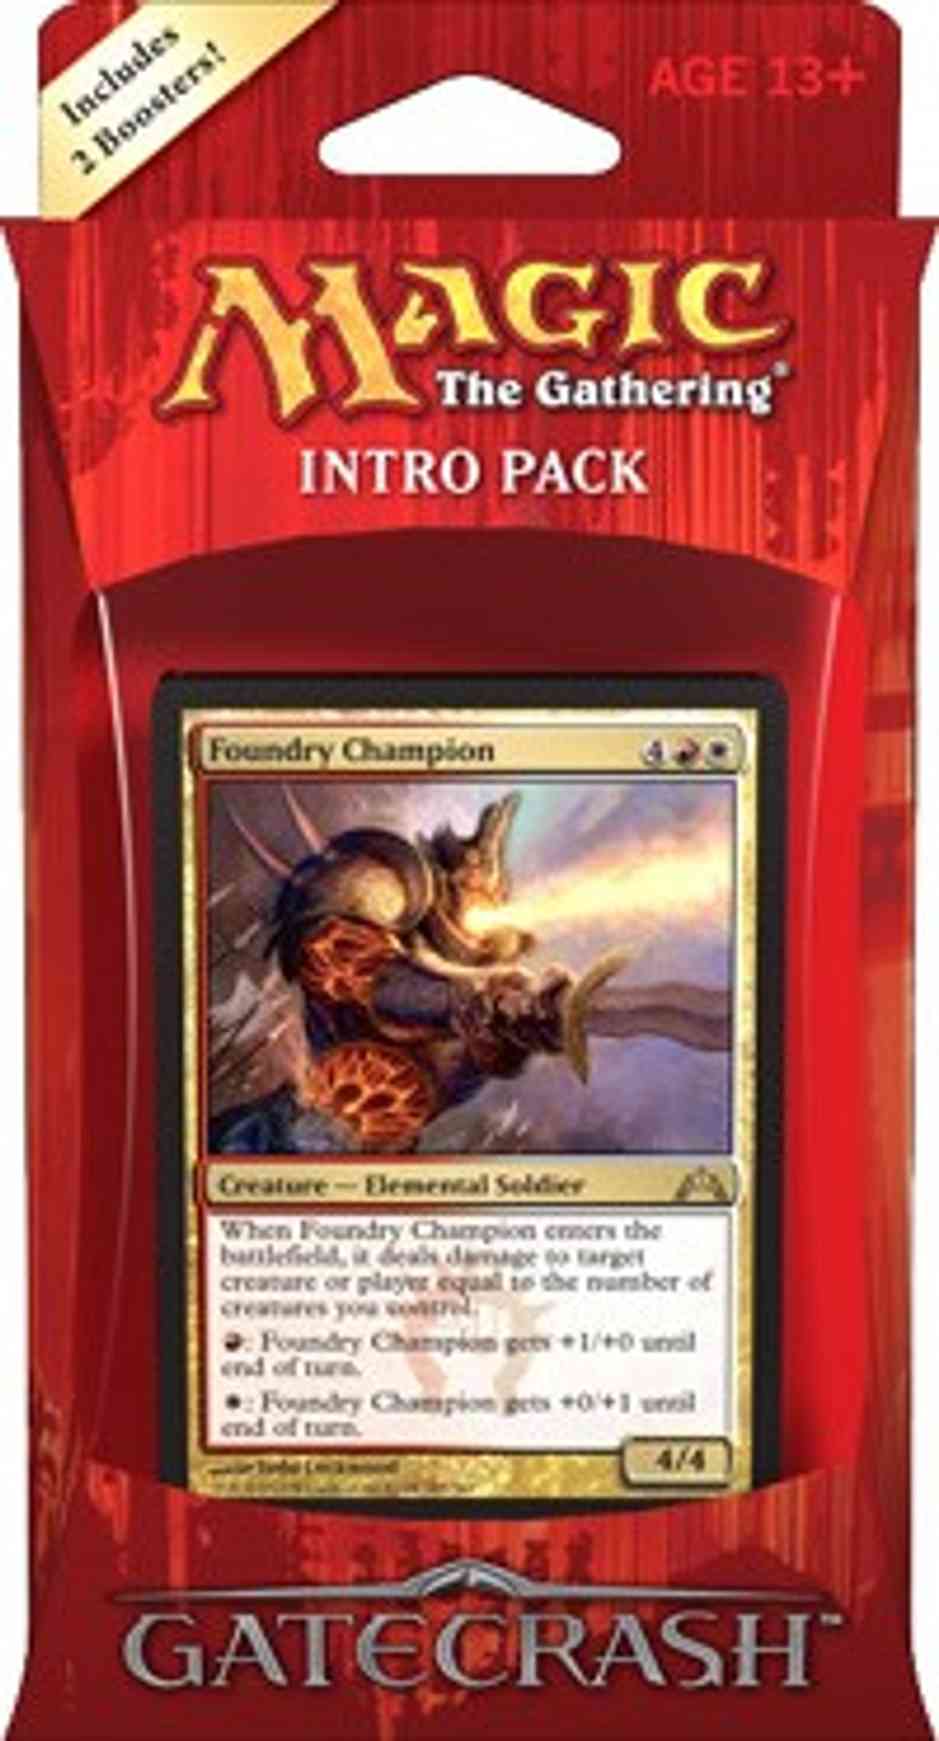 Gatecrash - Intro Pack - Boros Battalion magic card front